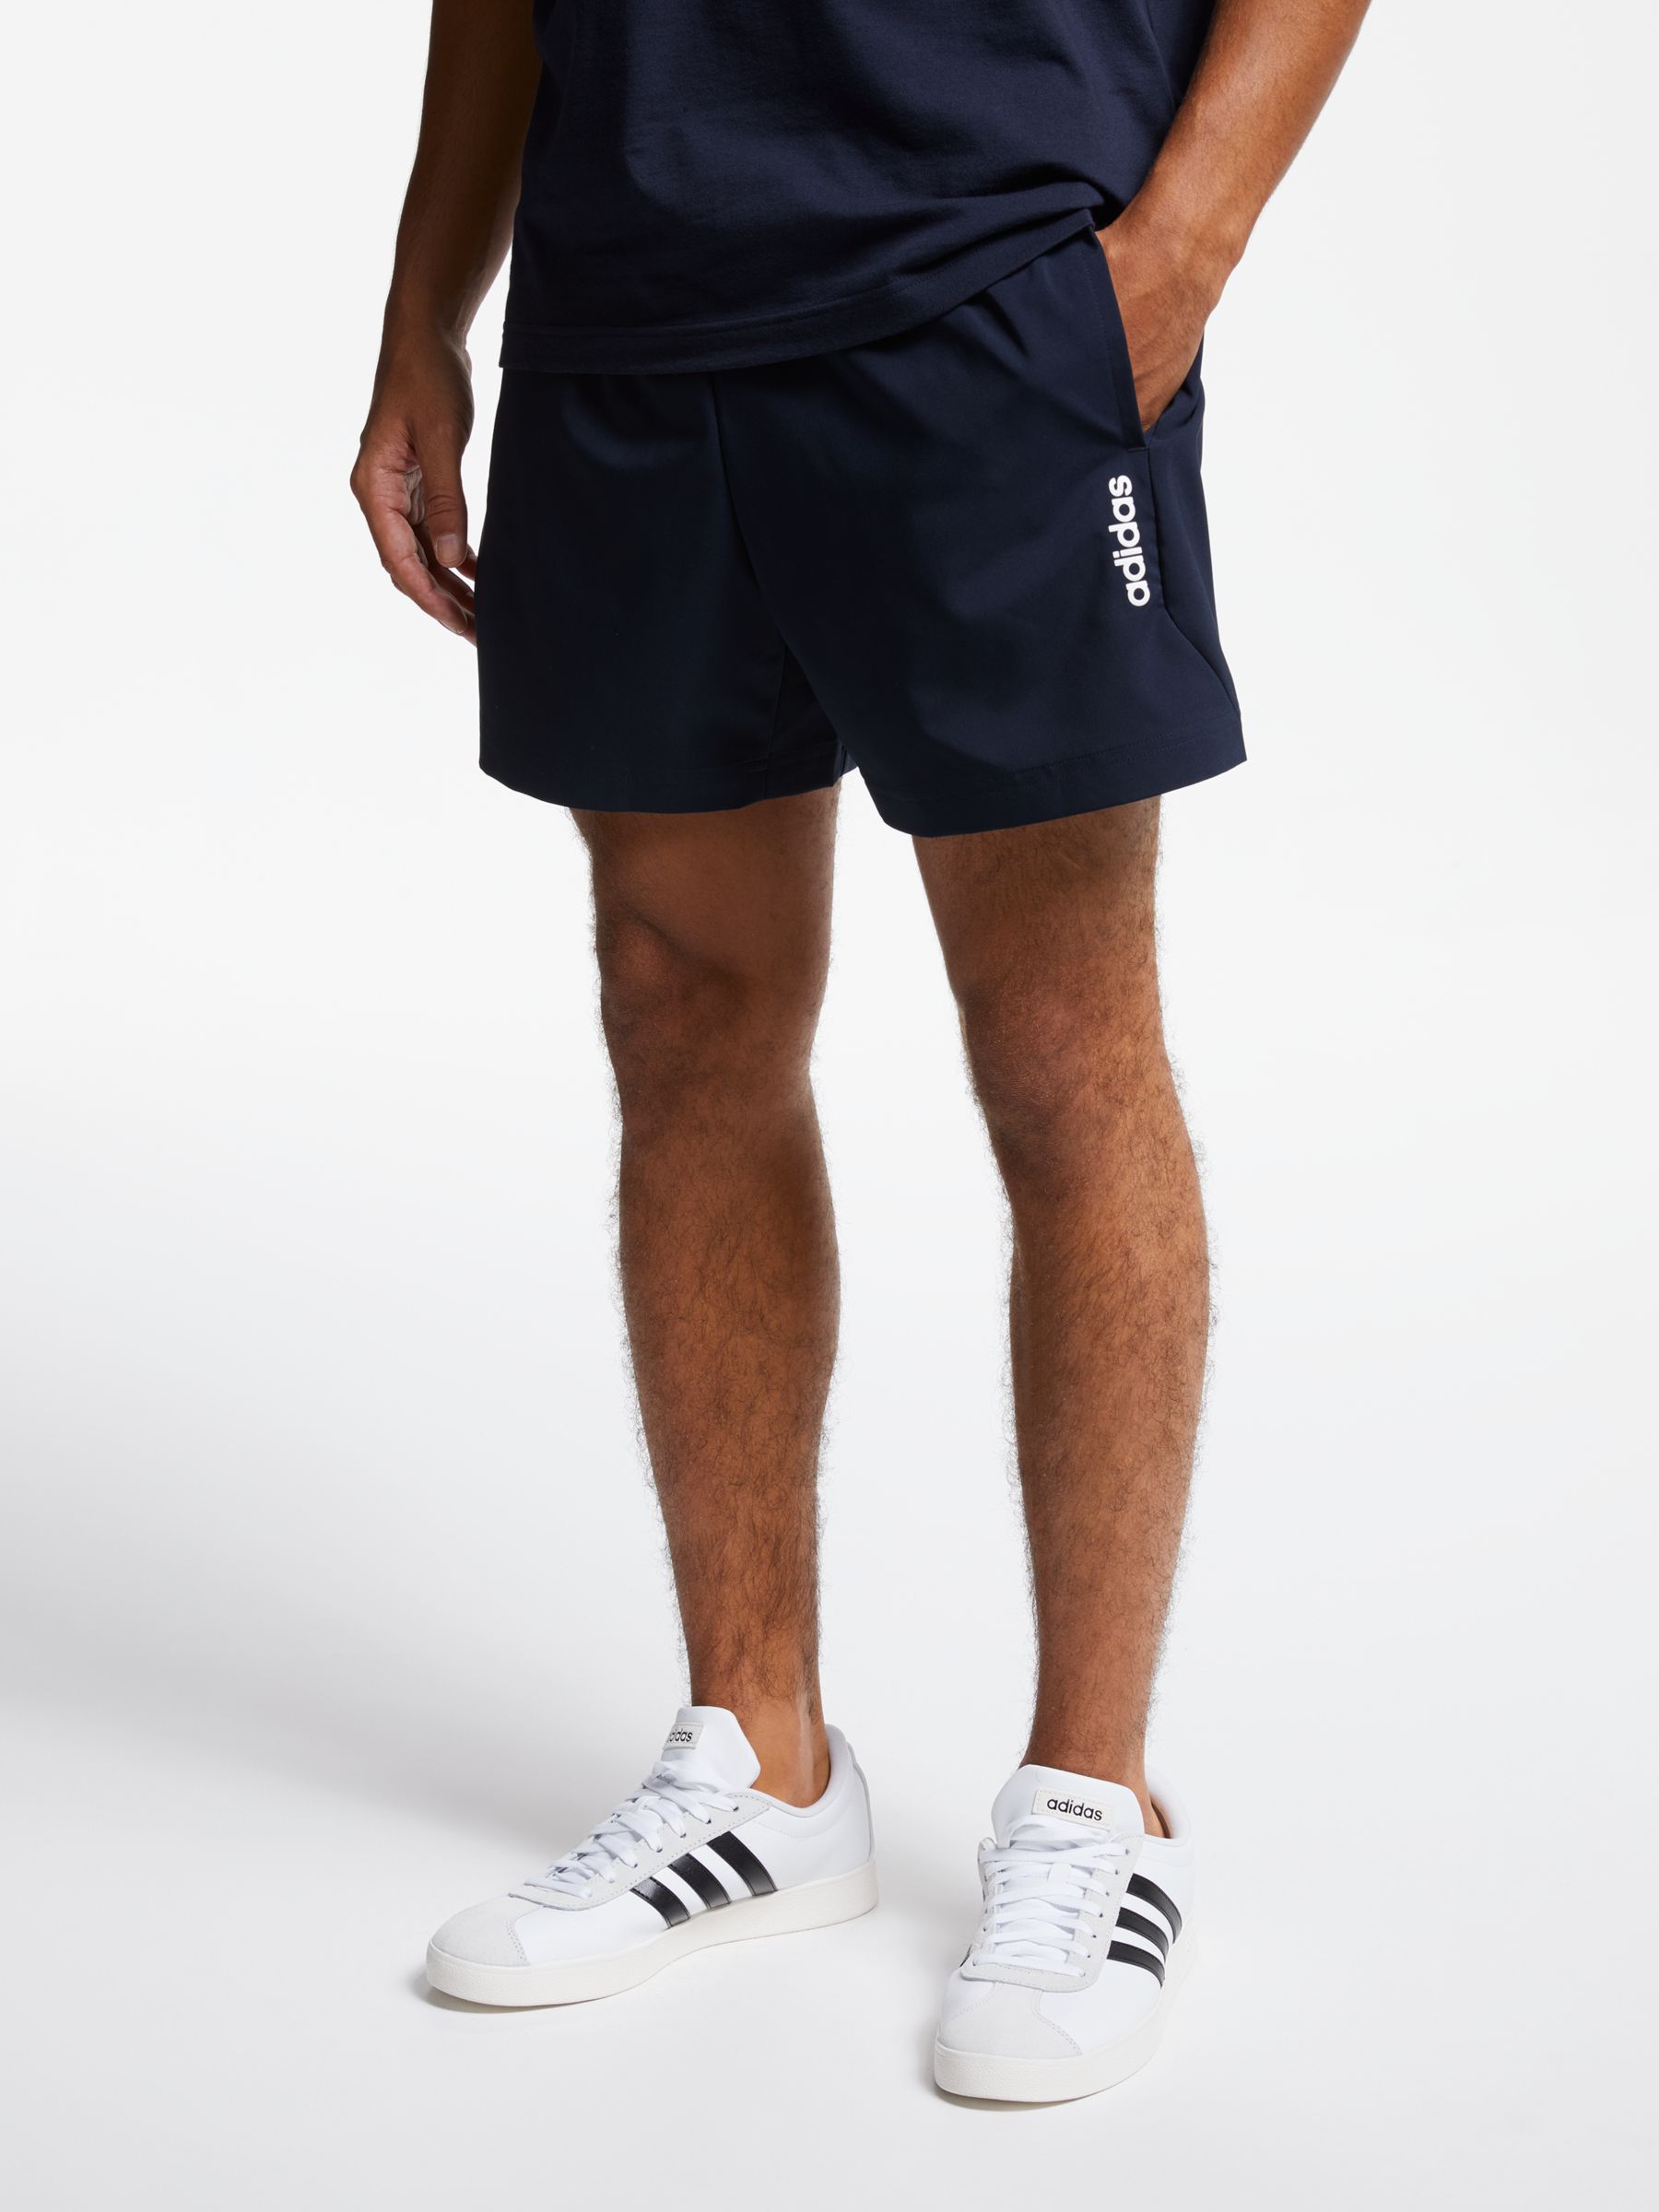 chelsea shorts adidas